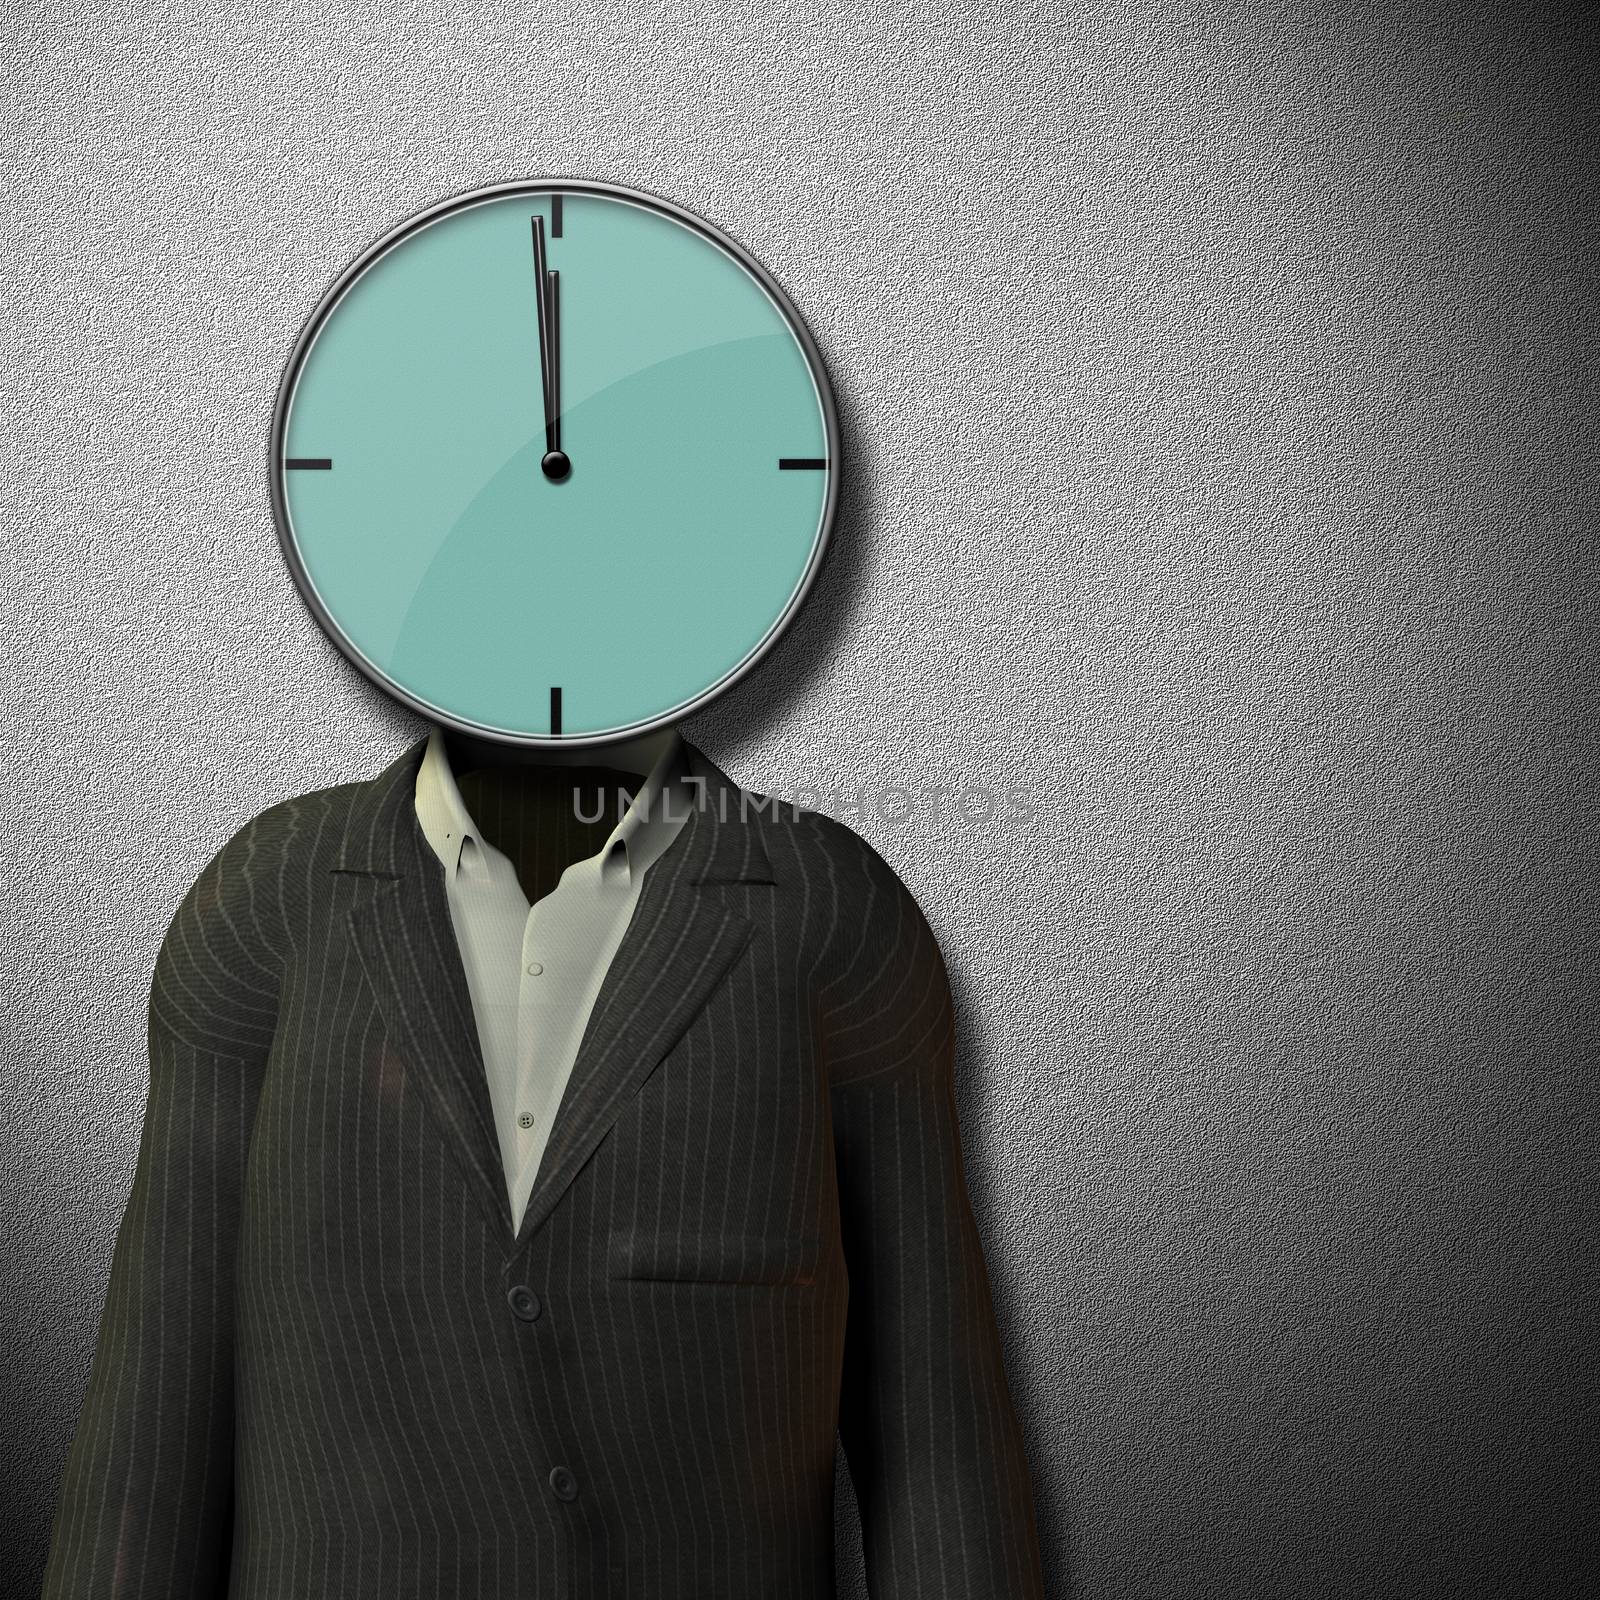 Clock face man in business suit